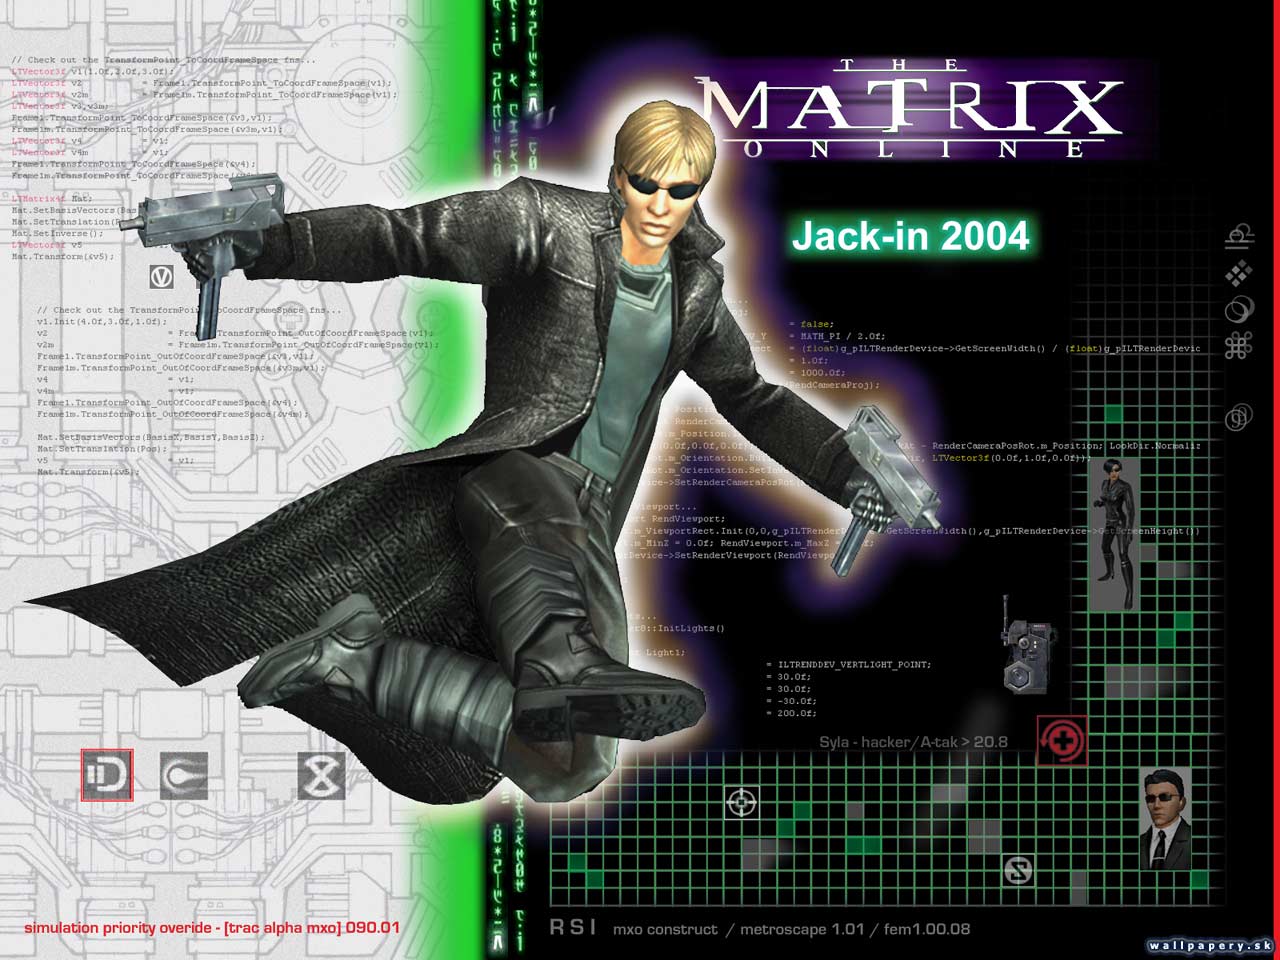 The Matrix Online - wallpaper 9